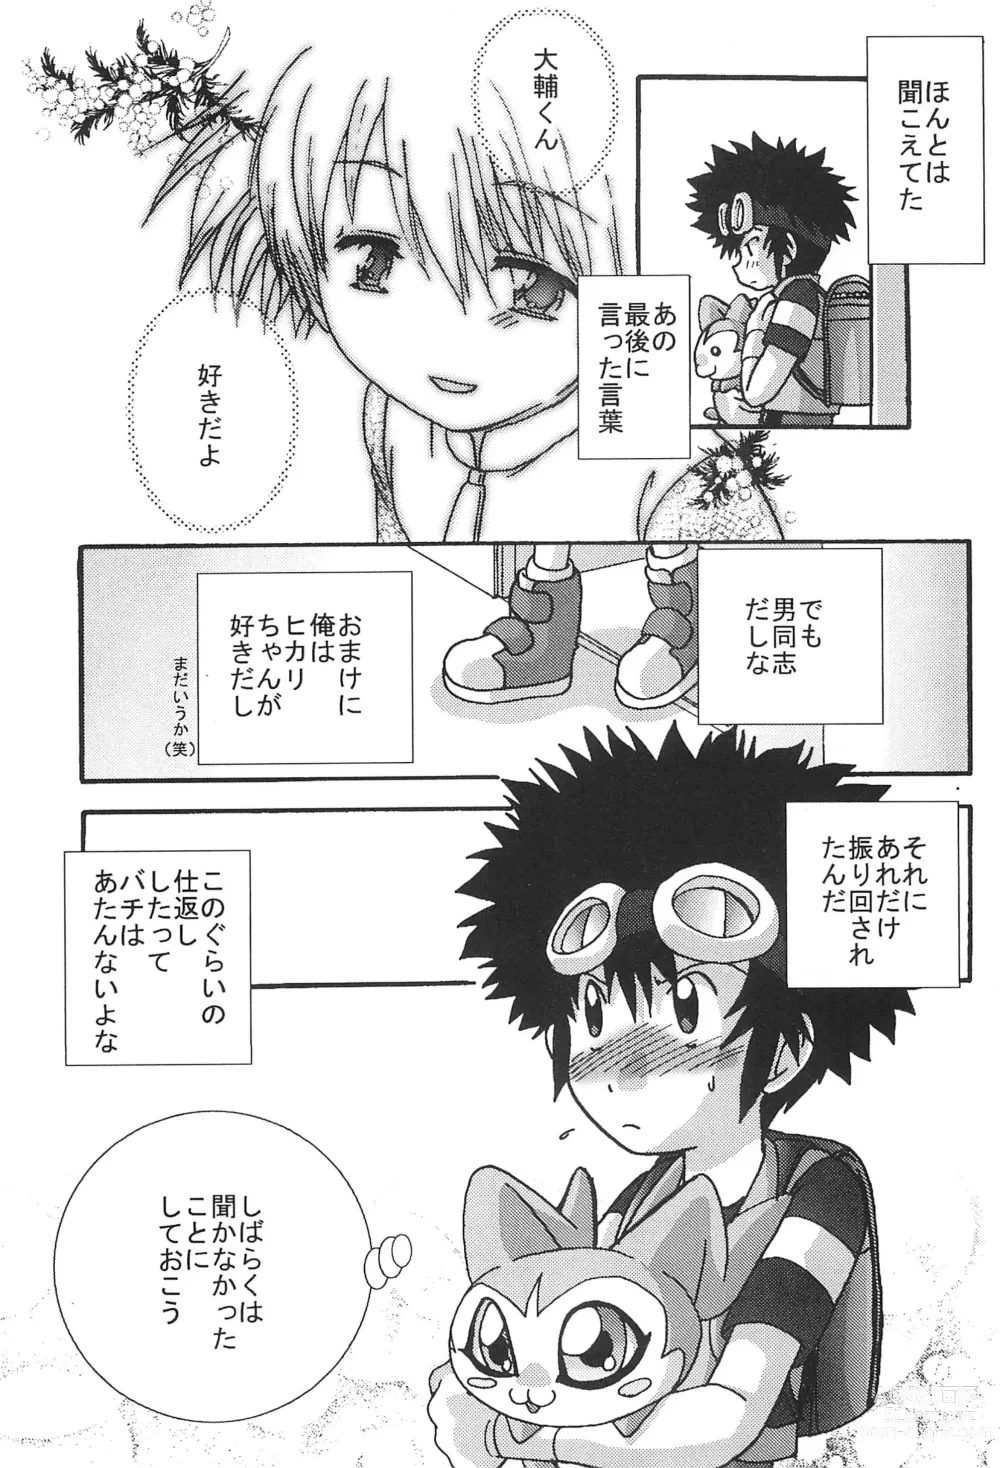 Page 39 of doujinshi SUBTLE RELATION